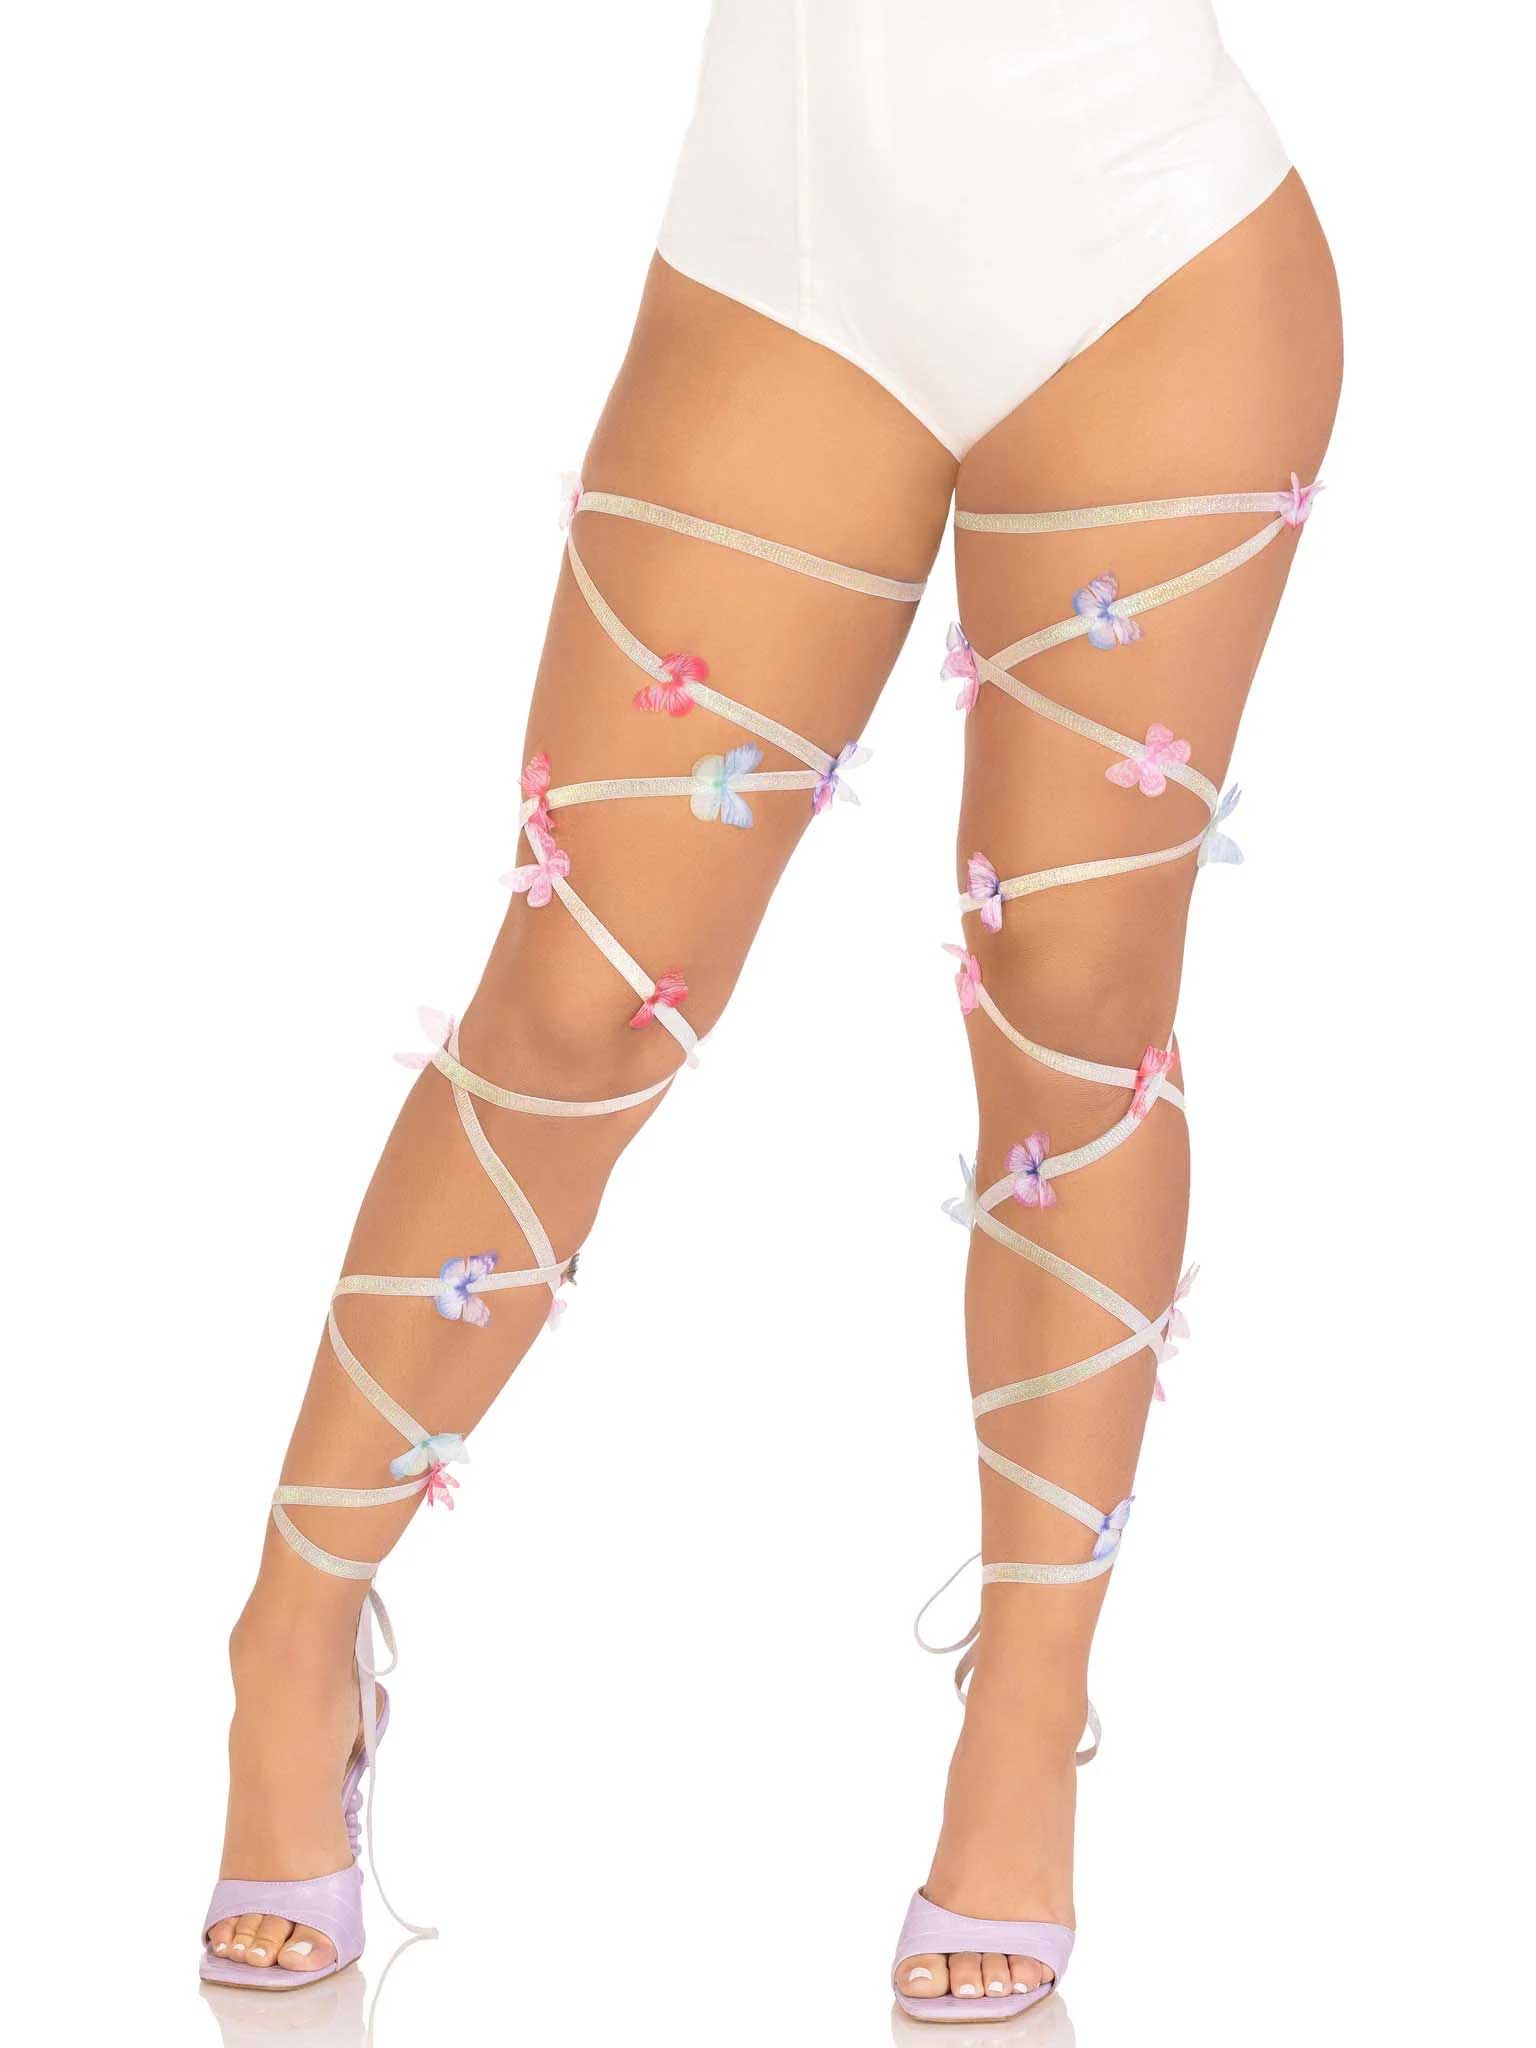 hosiery, sexy stockings